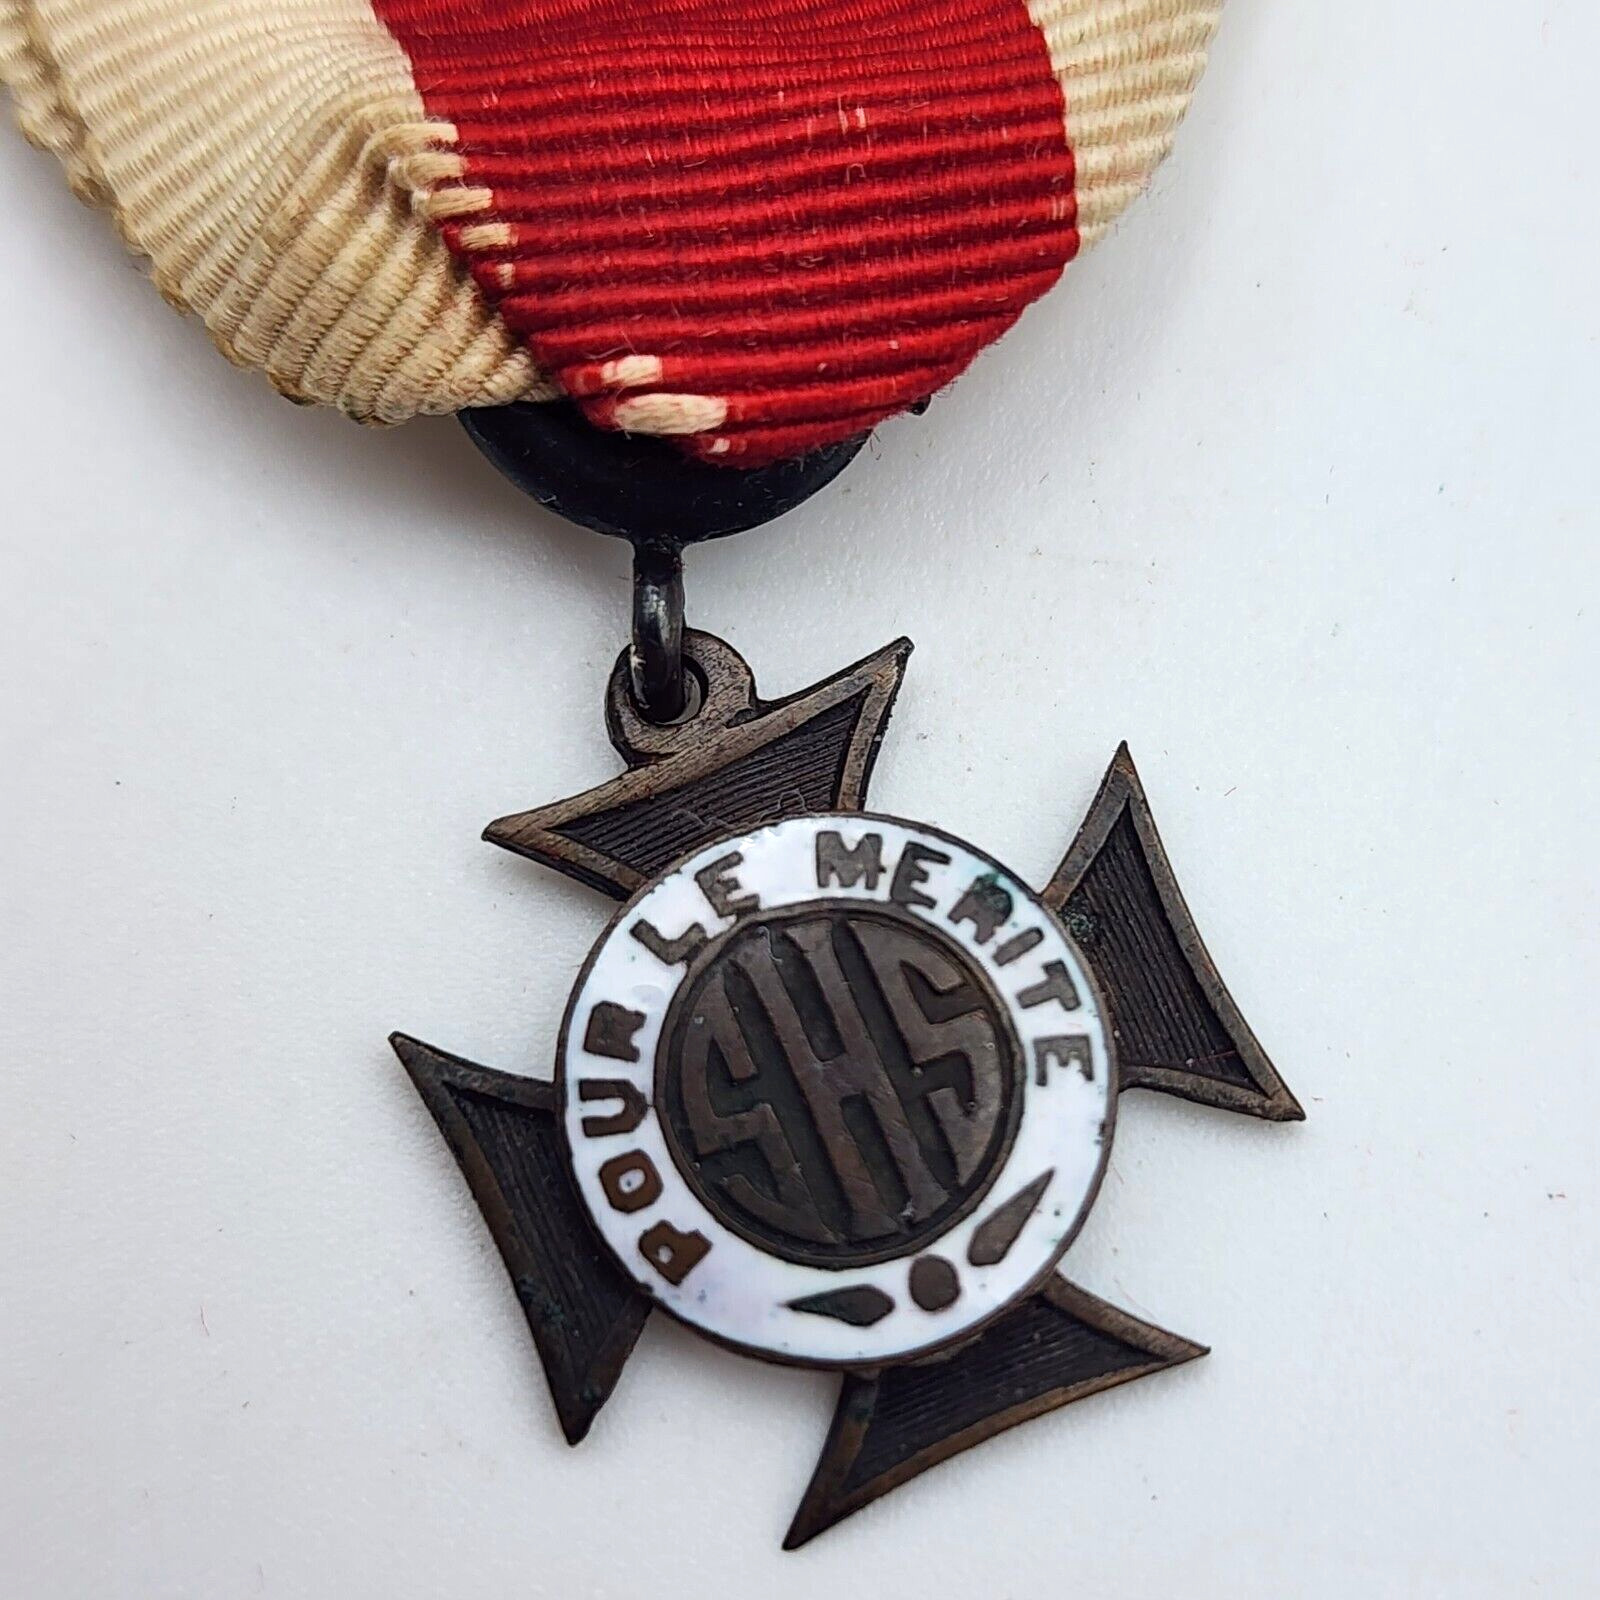 Vintage SHS Pour Le Merite Order of Merit Maltese Cross Ribbon Pin Badge